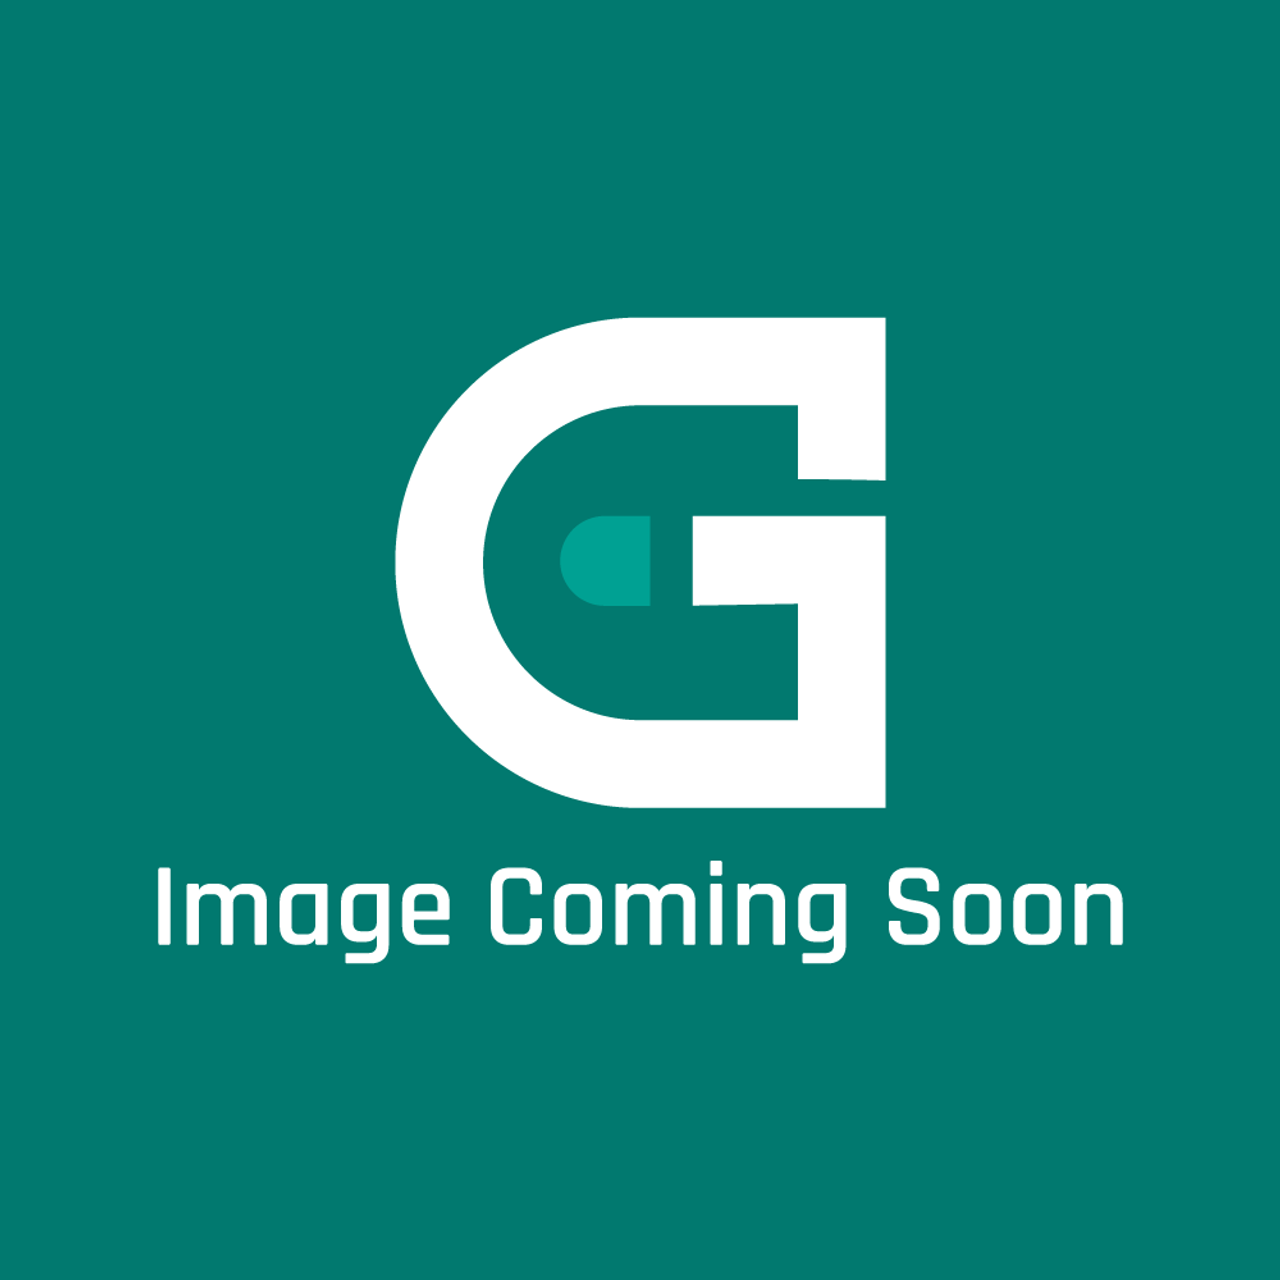 Groen Z066013 - Bracket Carborundum - Image Coming Soon!